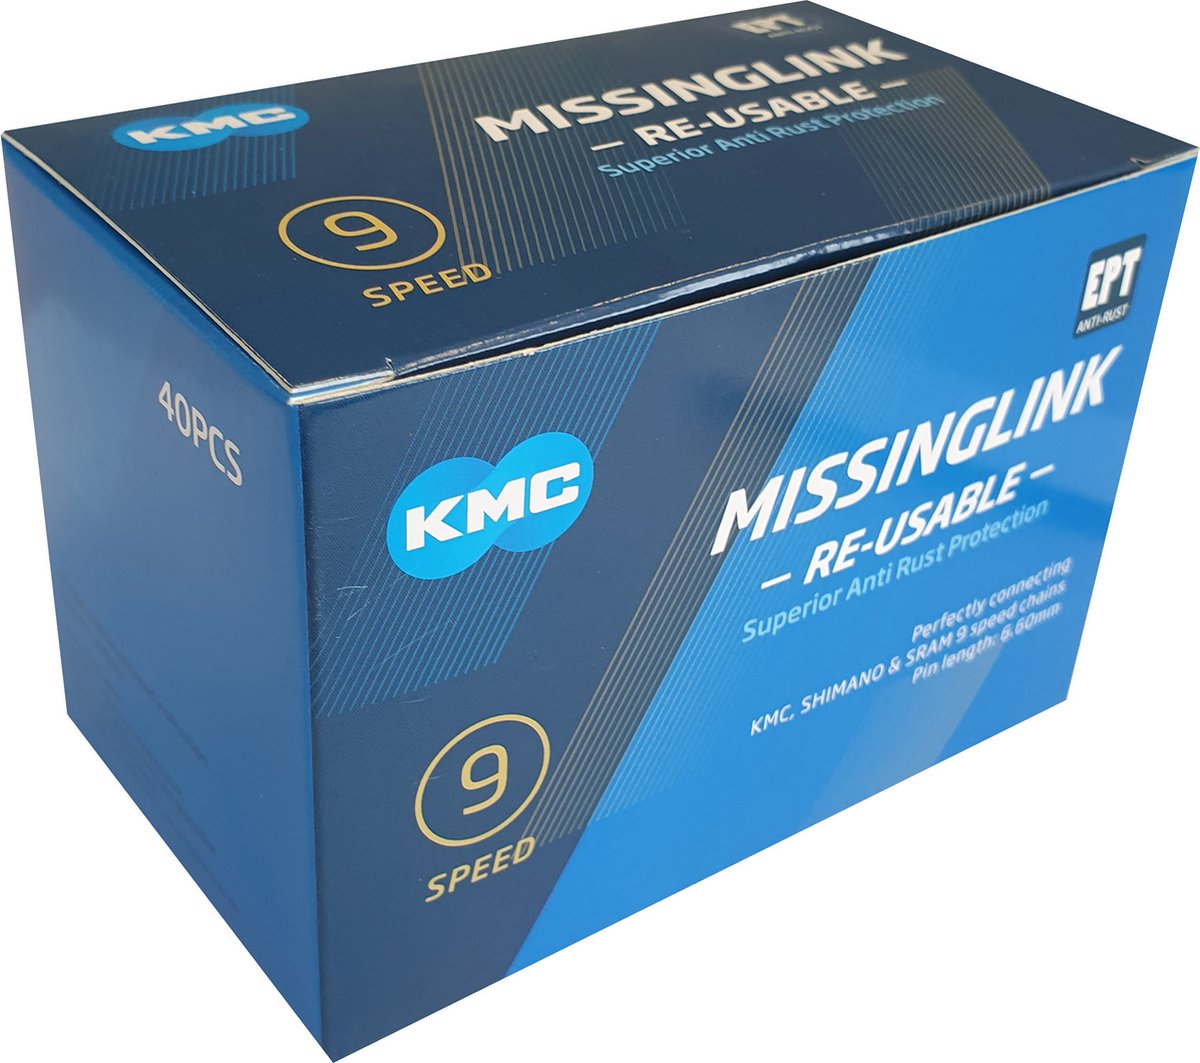 Kmc kettingschakel missinglink 9r ept zilver (40) - 125709